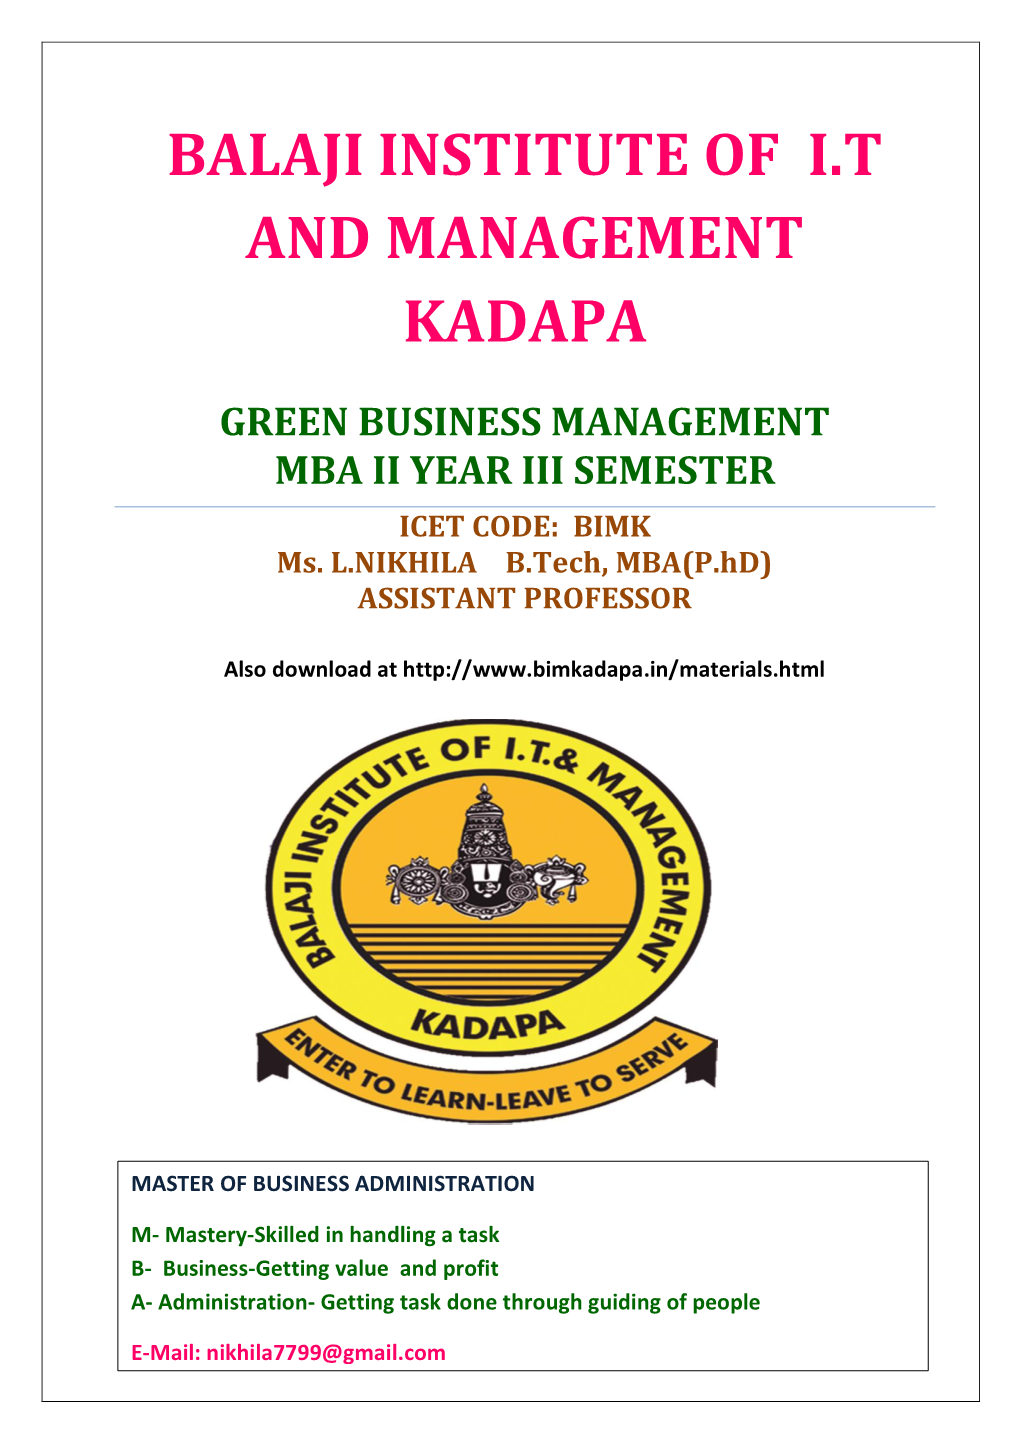 Balaji Institute of I.T and Management Kadapa